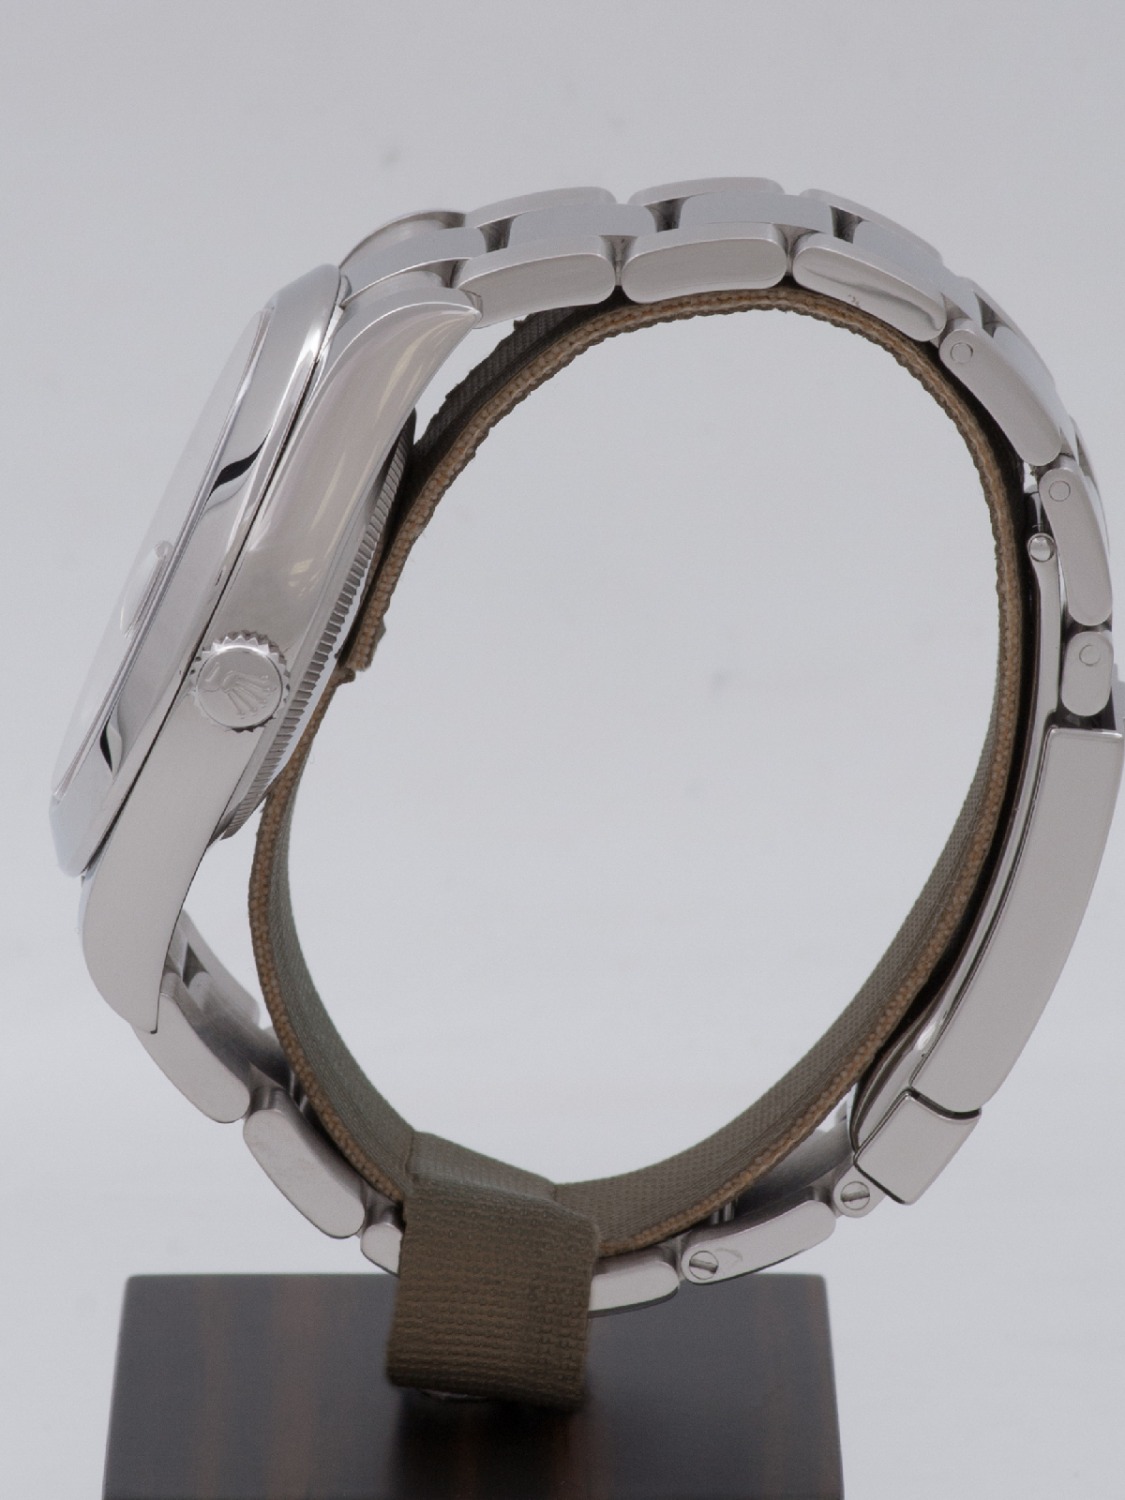 Rolex Datejust II 41 MM Black Dial watch, silver